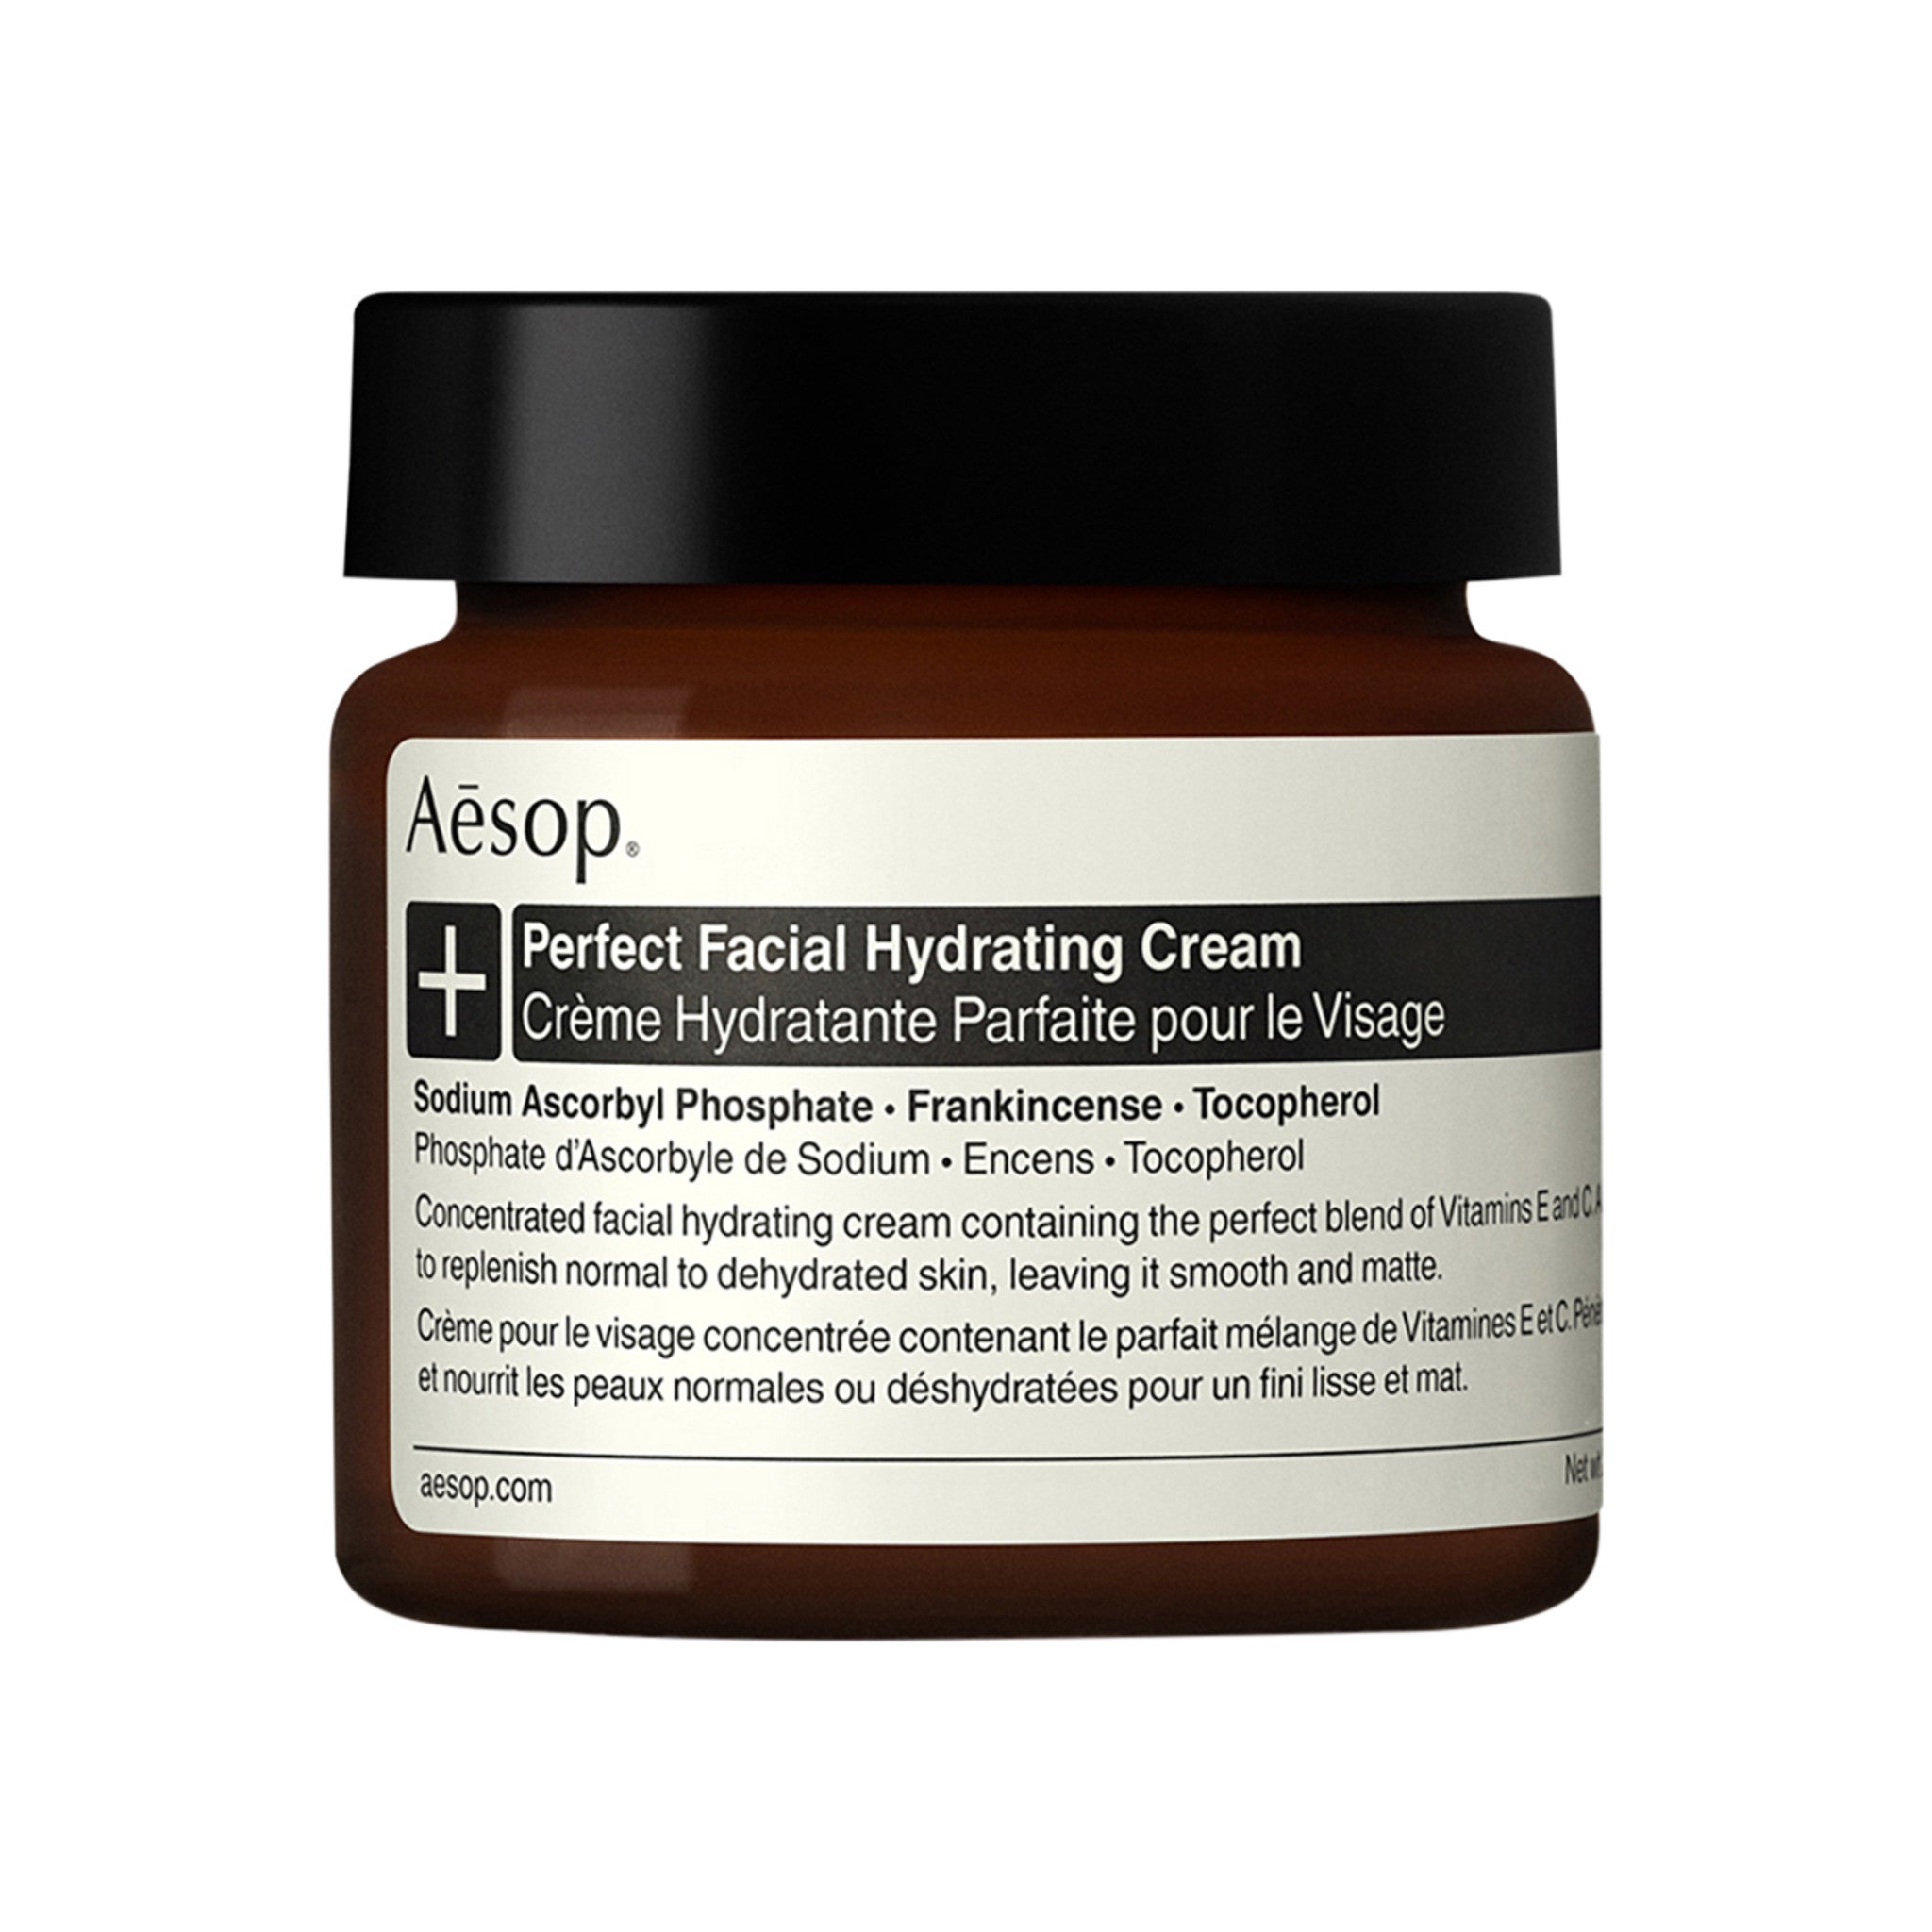 Aesop Perfect Facial Hydrating Cream main image.